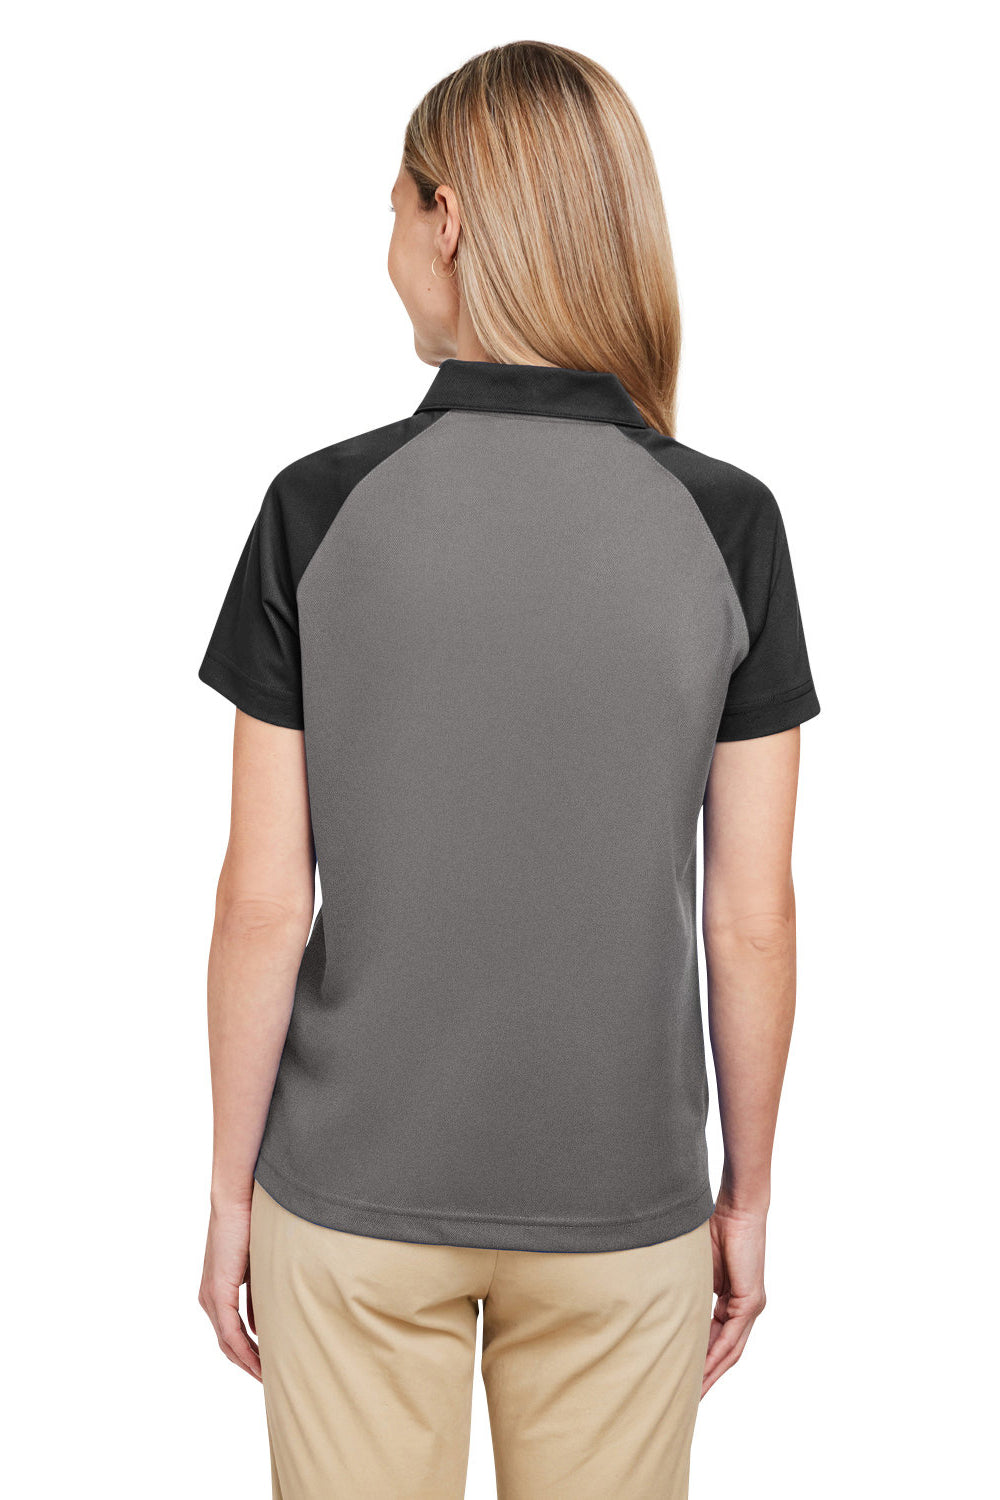 Team 365 TT21CW Womens Command Colorblock Moisture Wicking Short Sleeve Polo Shirt Graphite Grey/Black Back